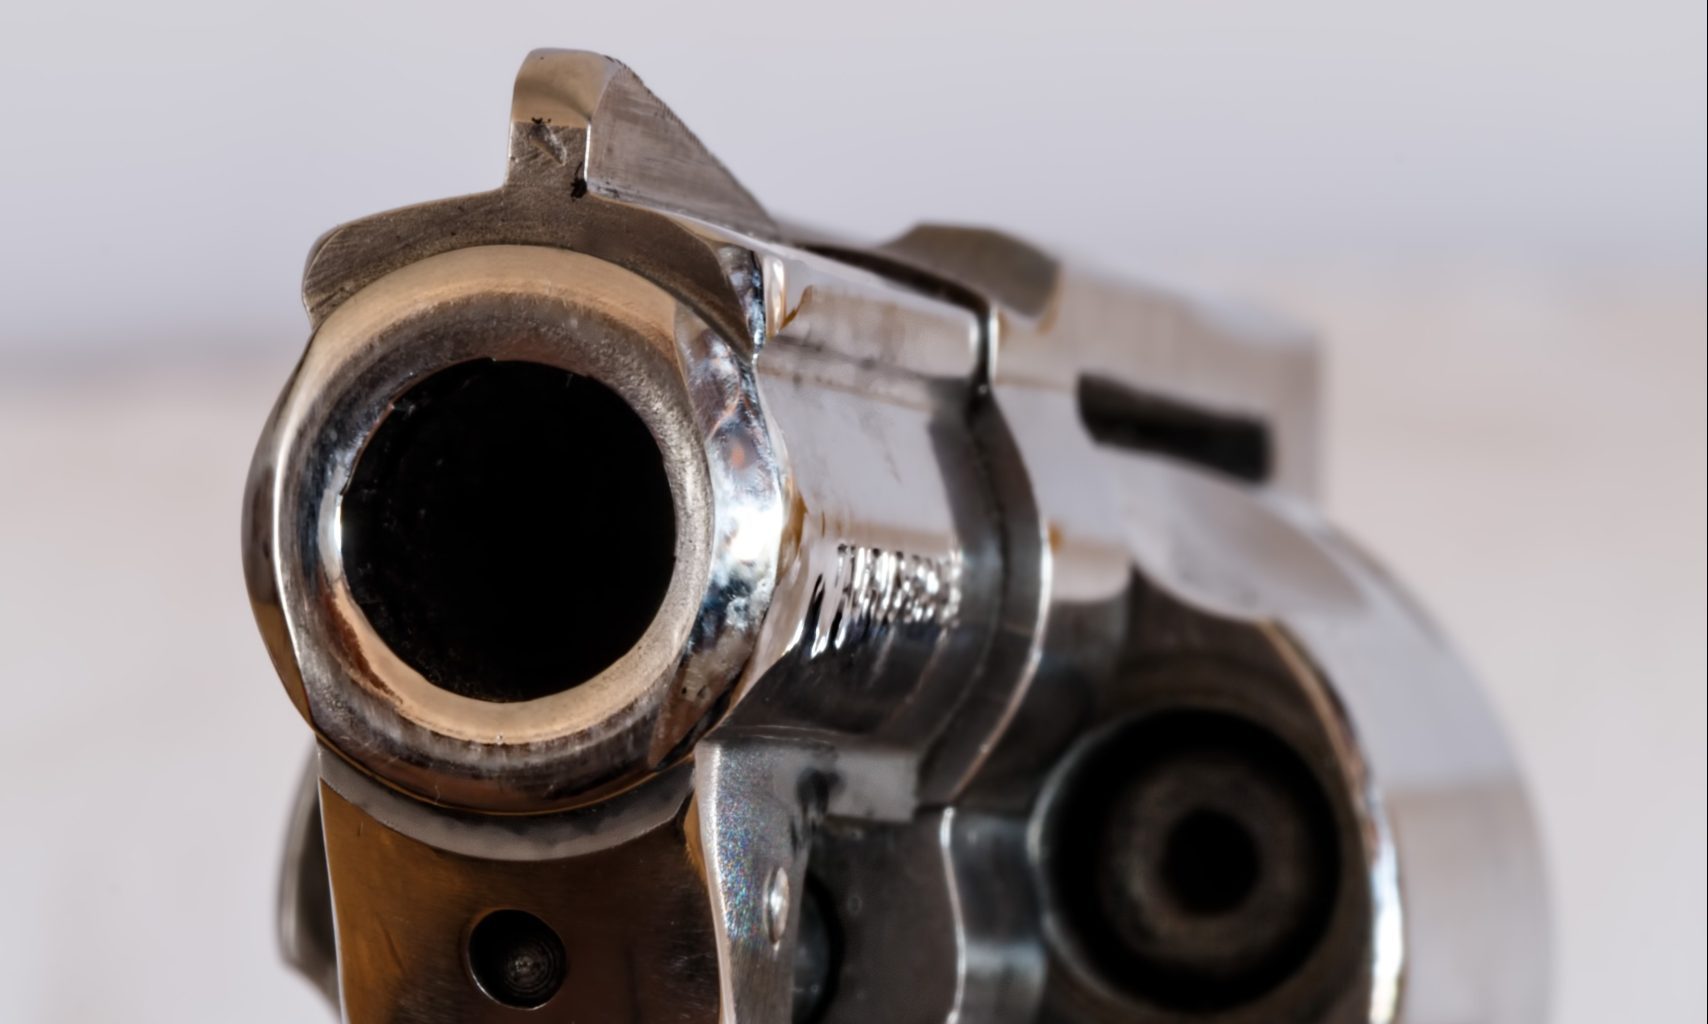 Snub-nosed revolver